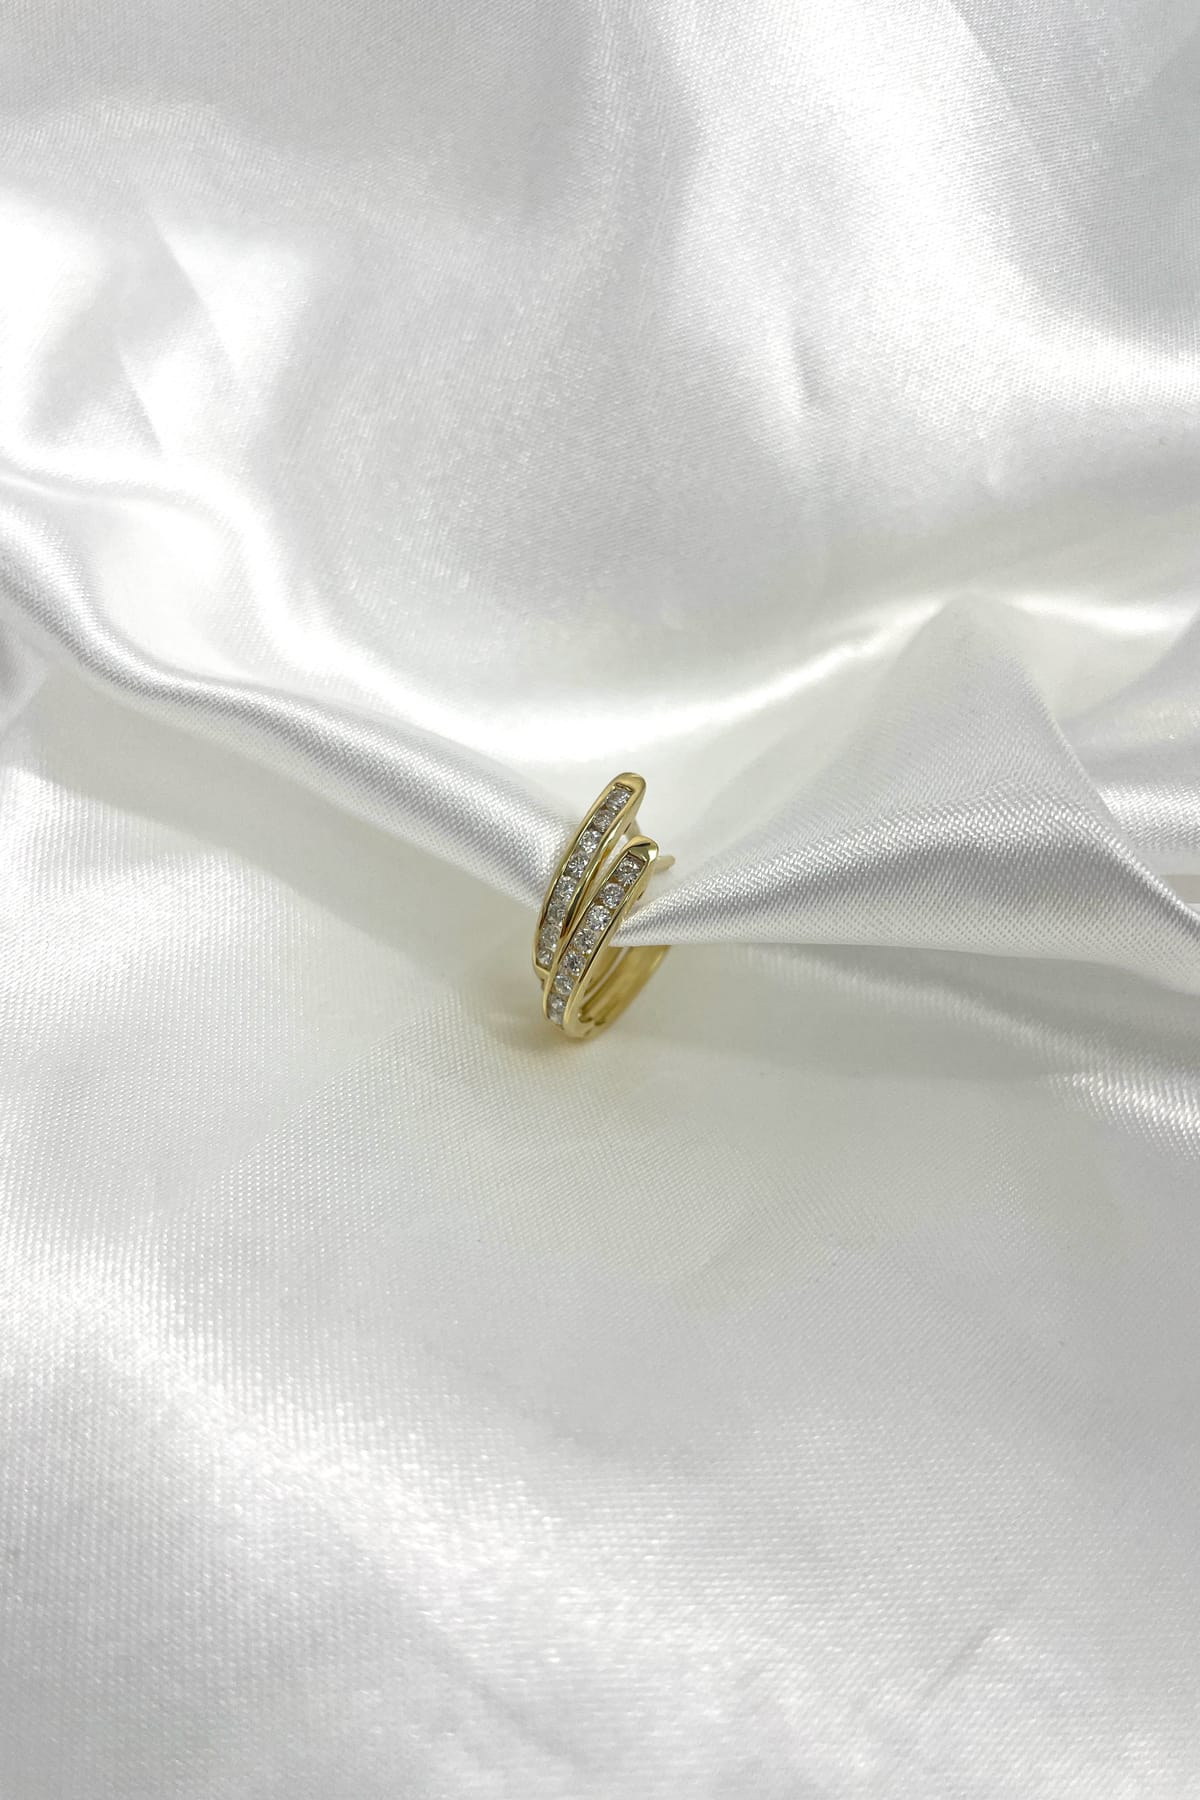 9 Carat Yellow Gold Diamond Set Huggie Earrings available at LeGassick Diamonds and Jewellery Gold Coast, Australia.